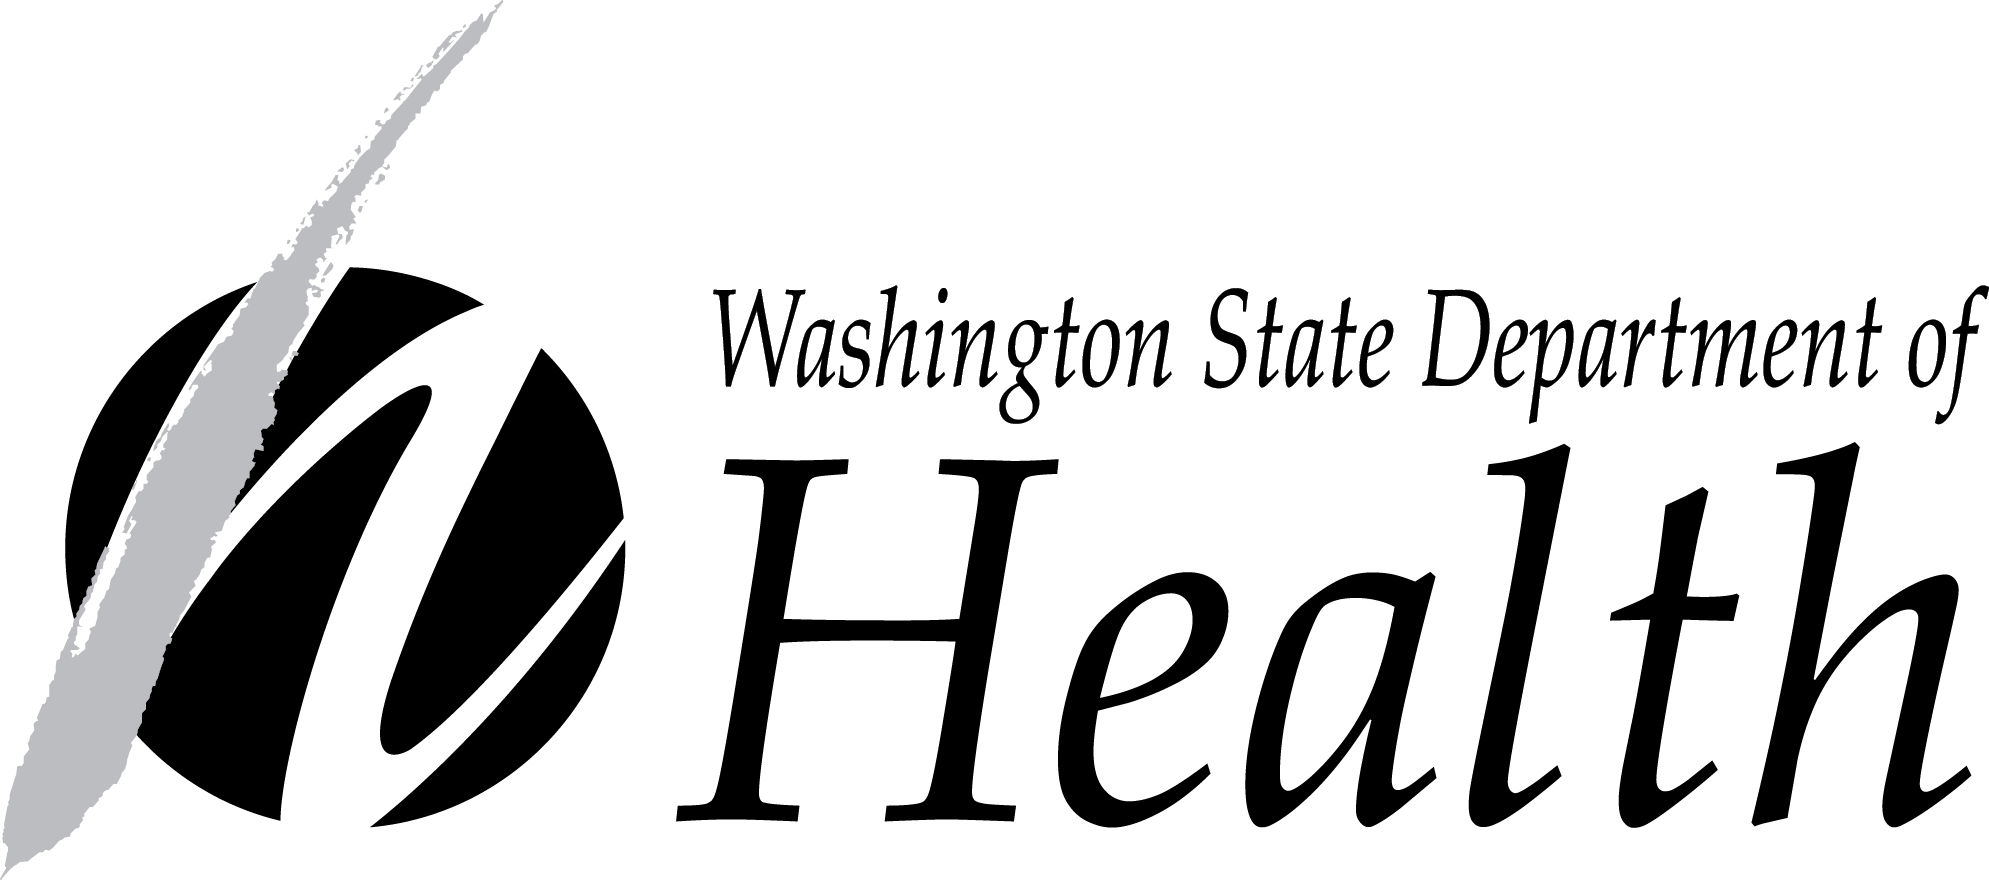 washington state department of health logo